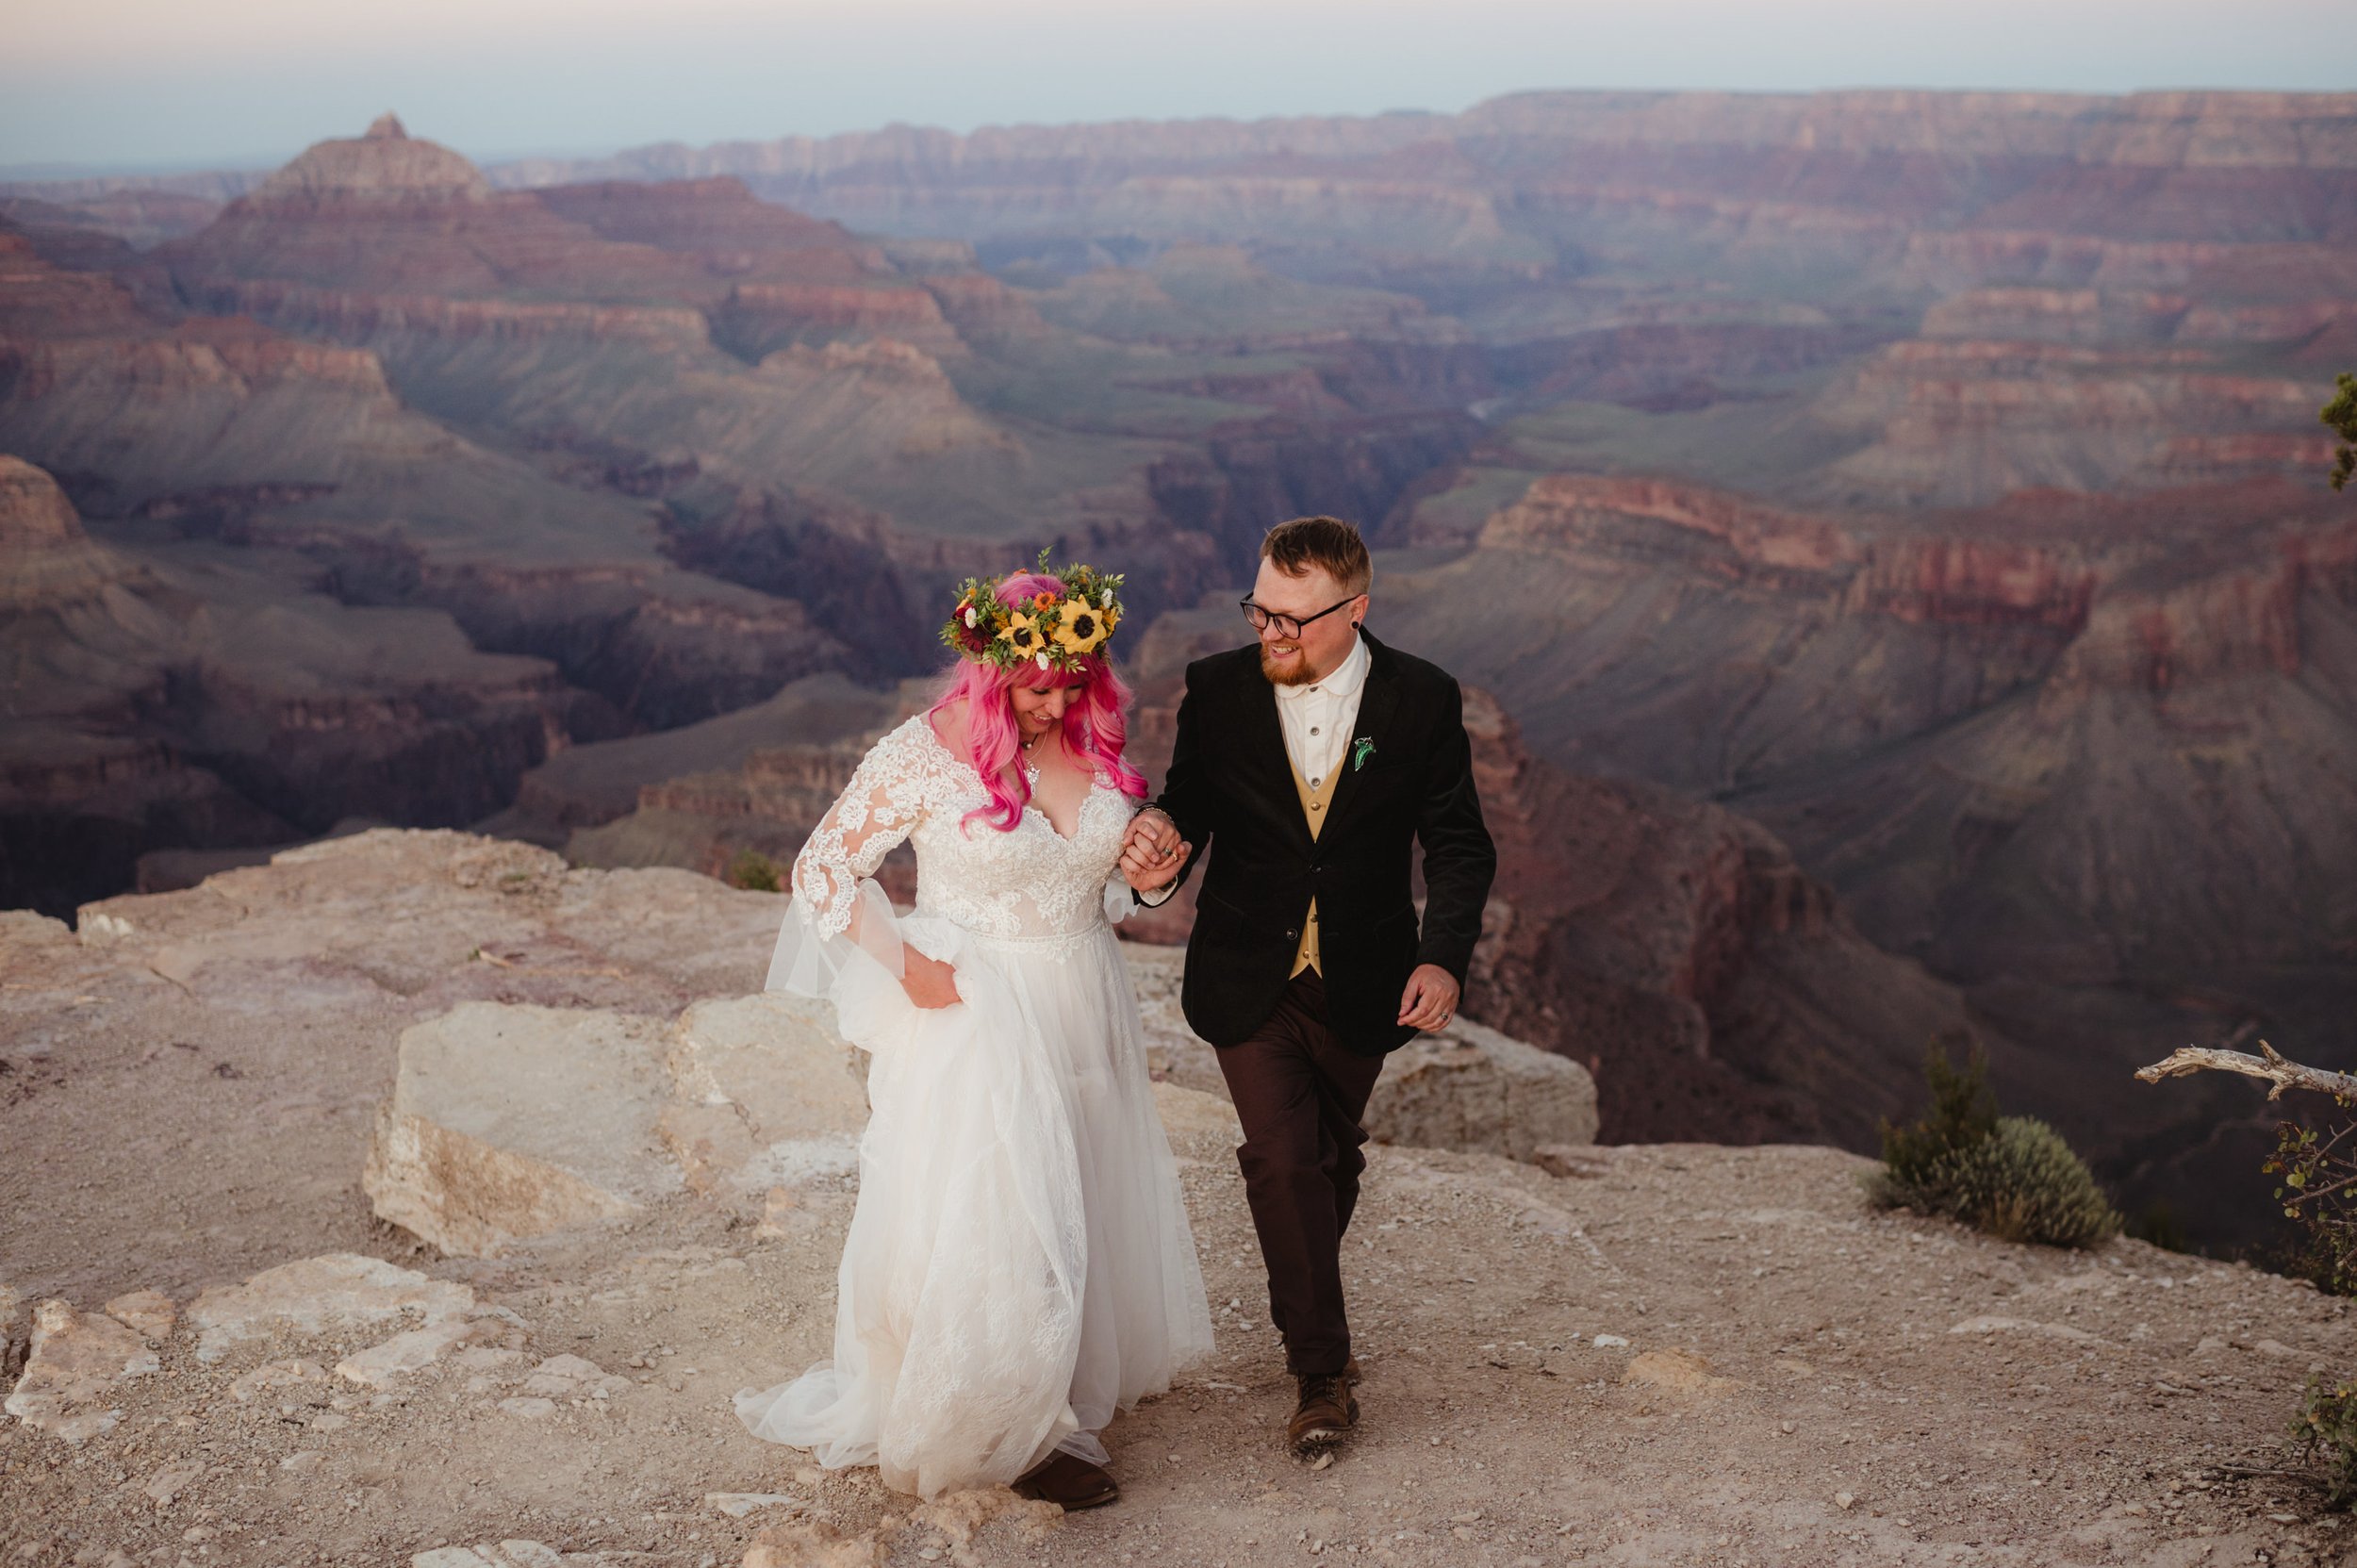 Lord of the Rings Grand Canyon Wedding - Amber Garrett Photography - 075.JPG